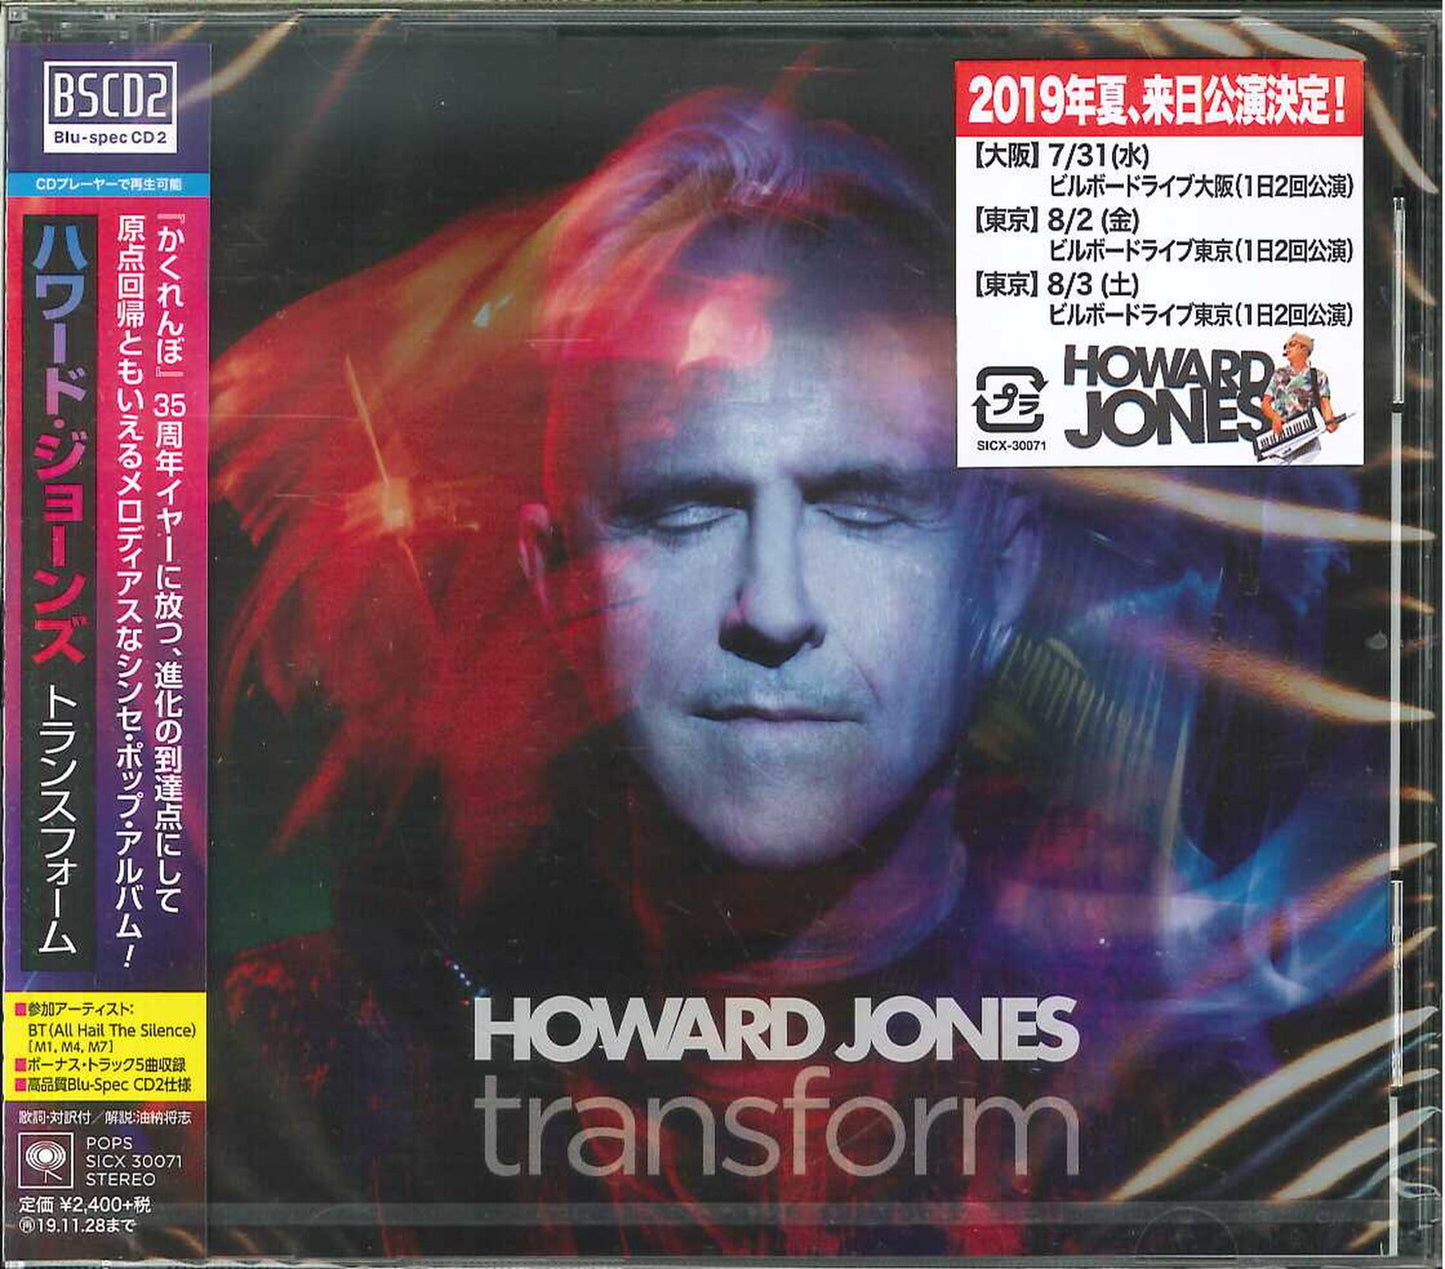 Howard Jones - Transform - Japan  Blu-spec CD2 Bonus Track